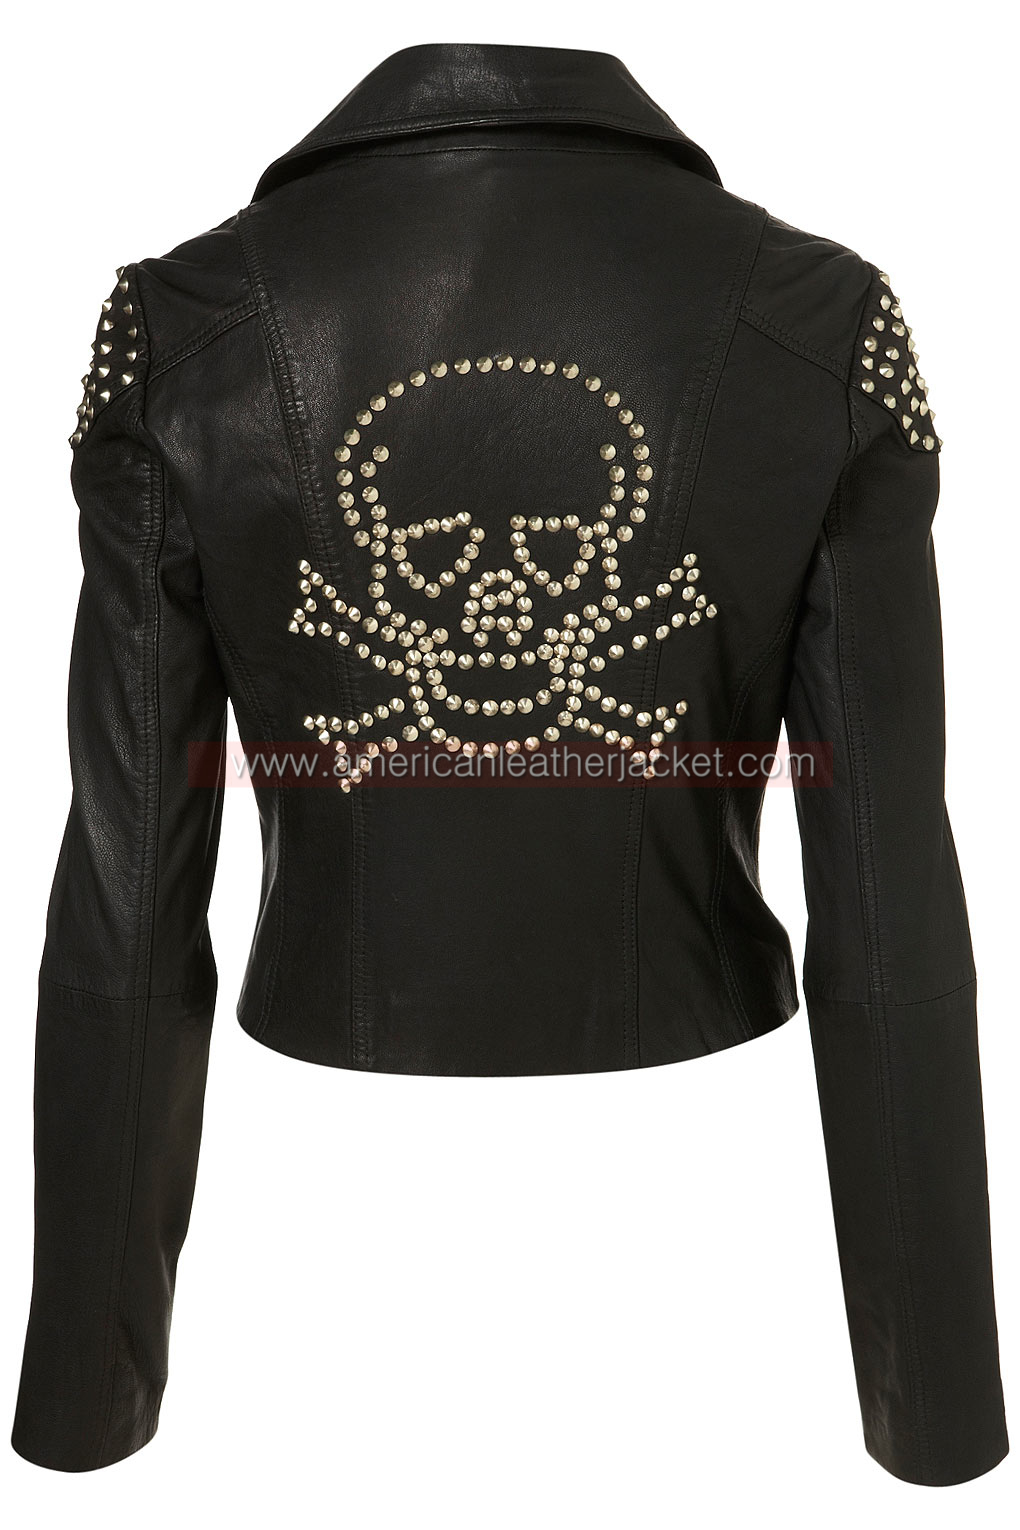 Ladies Biker Leather Jacket Black 'Skull Studded' Rock Fashion Gothic 2740